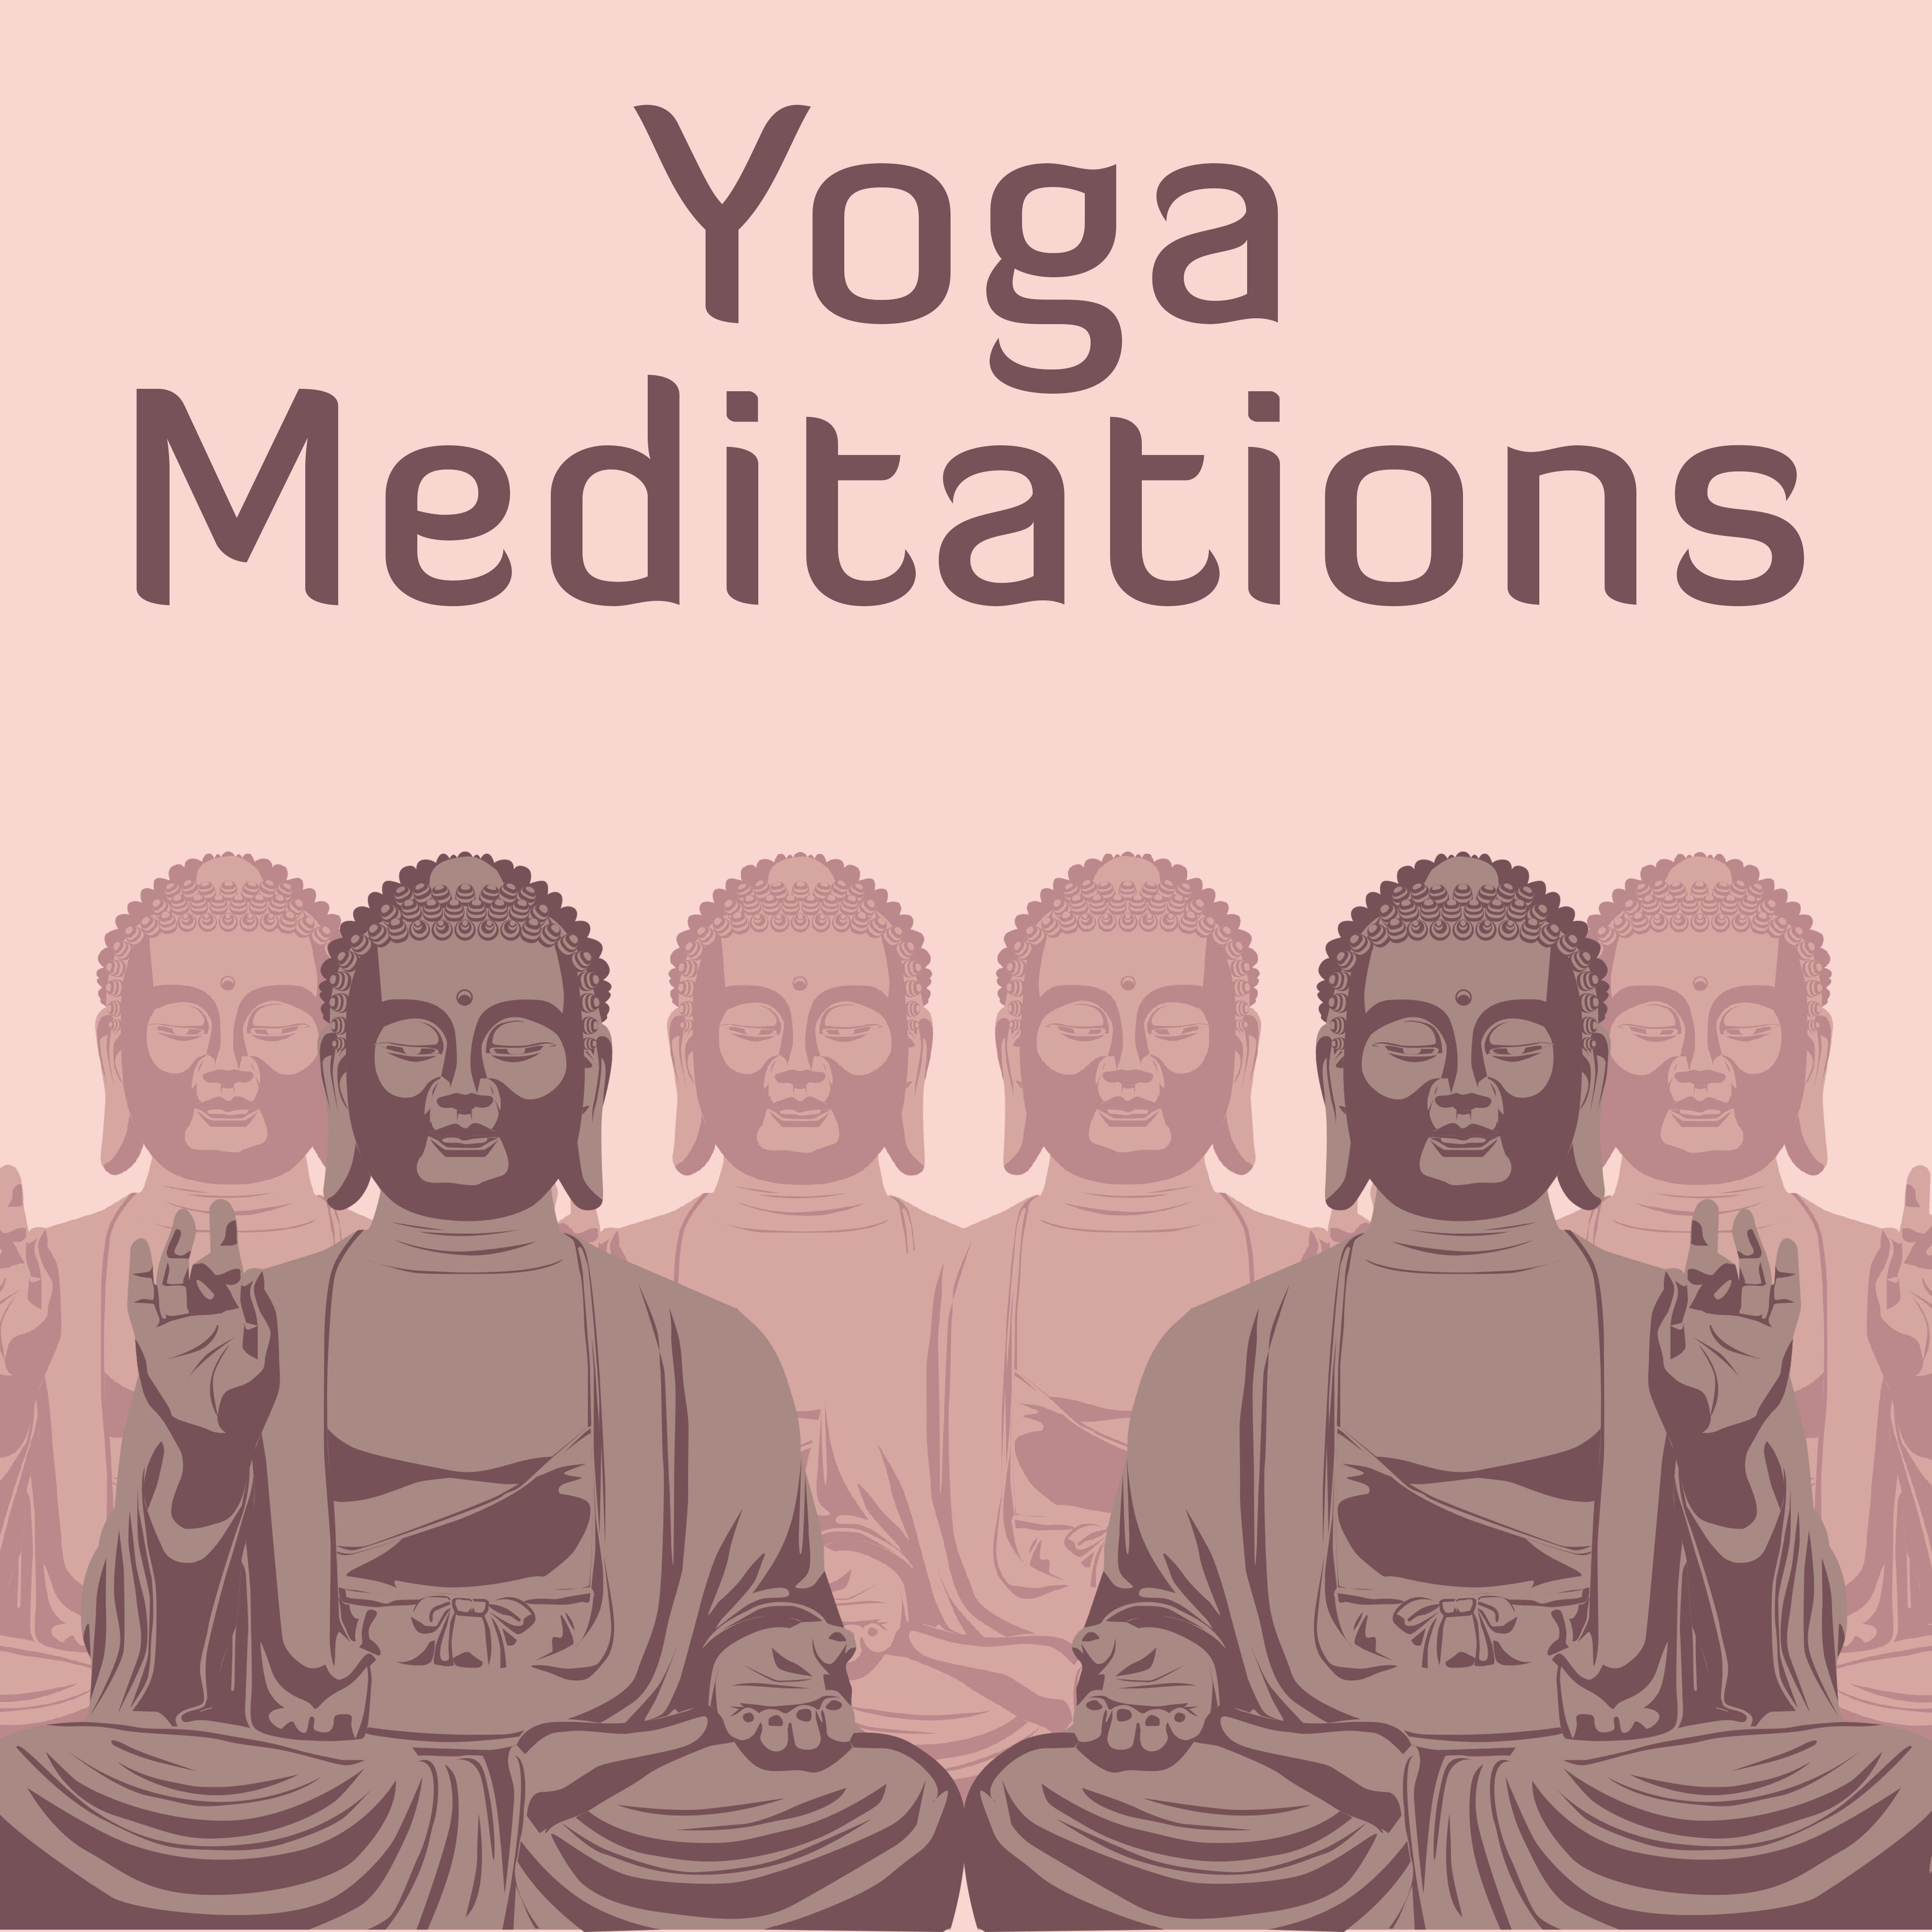 Tibetan Meditation